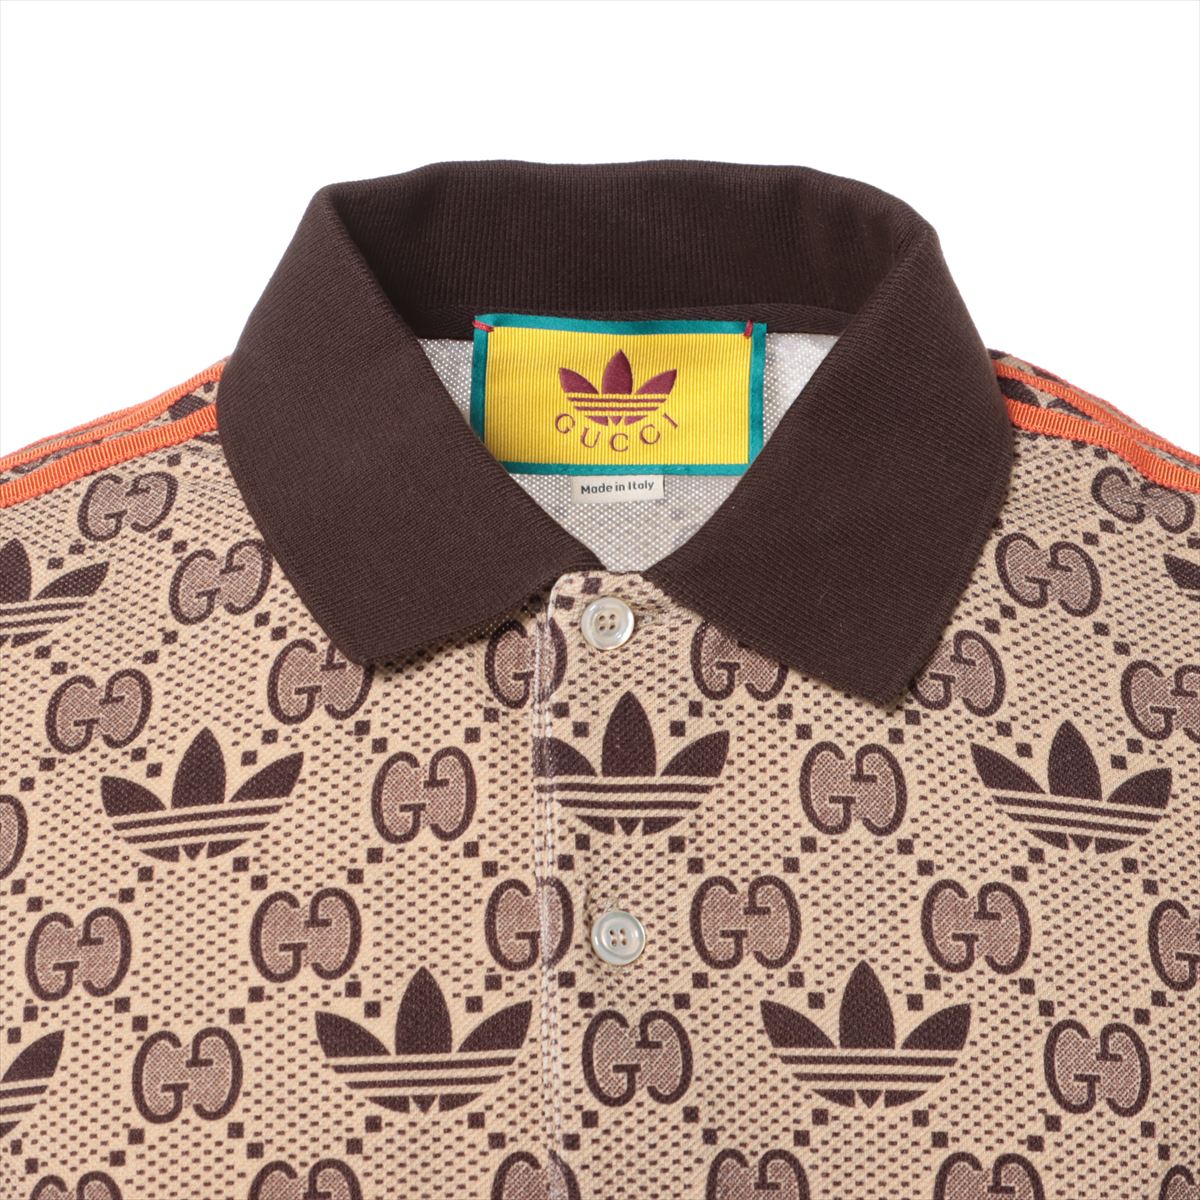 Gucci x adidas GG Cotton Polo shirt XL Men's Brown  Trefoil 700497